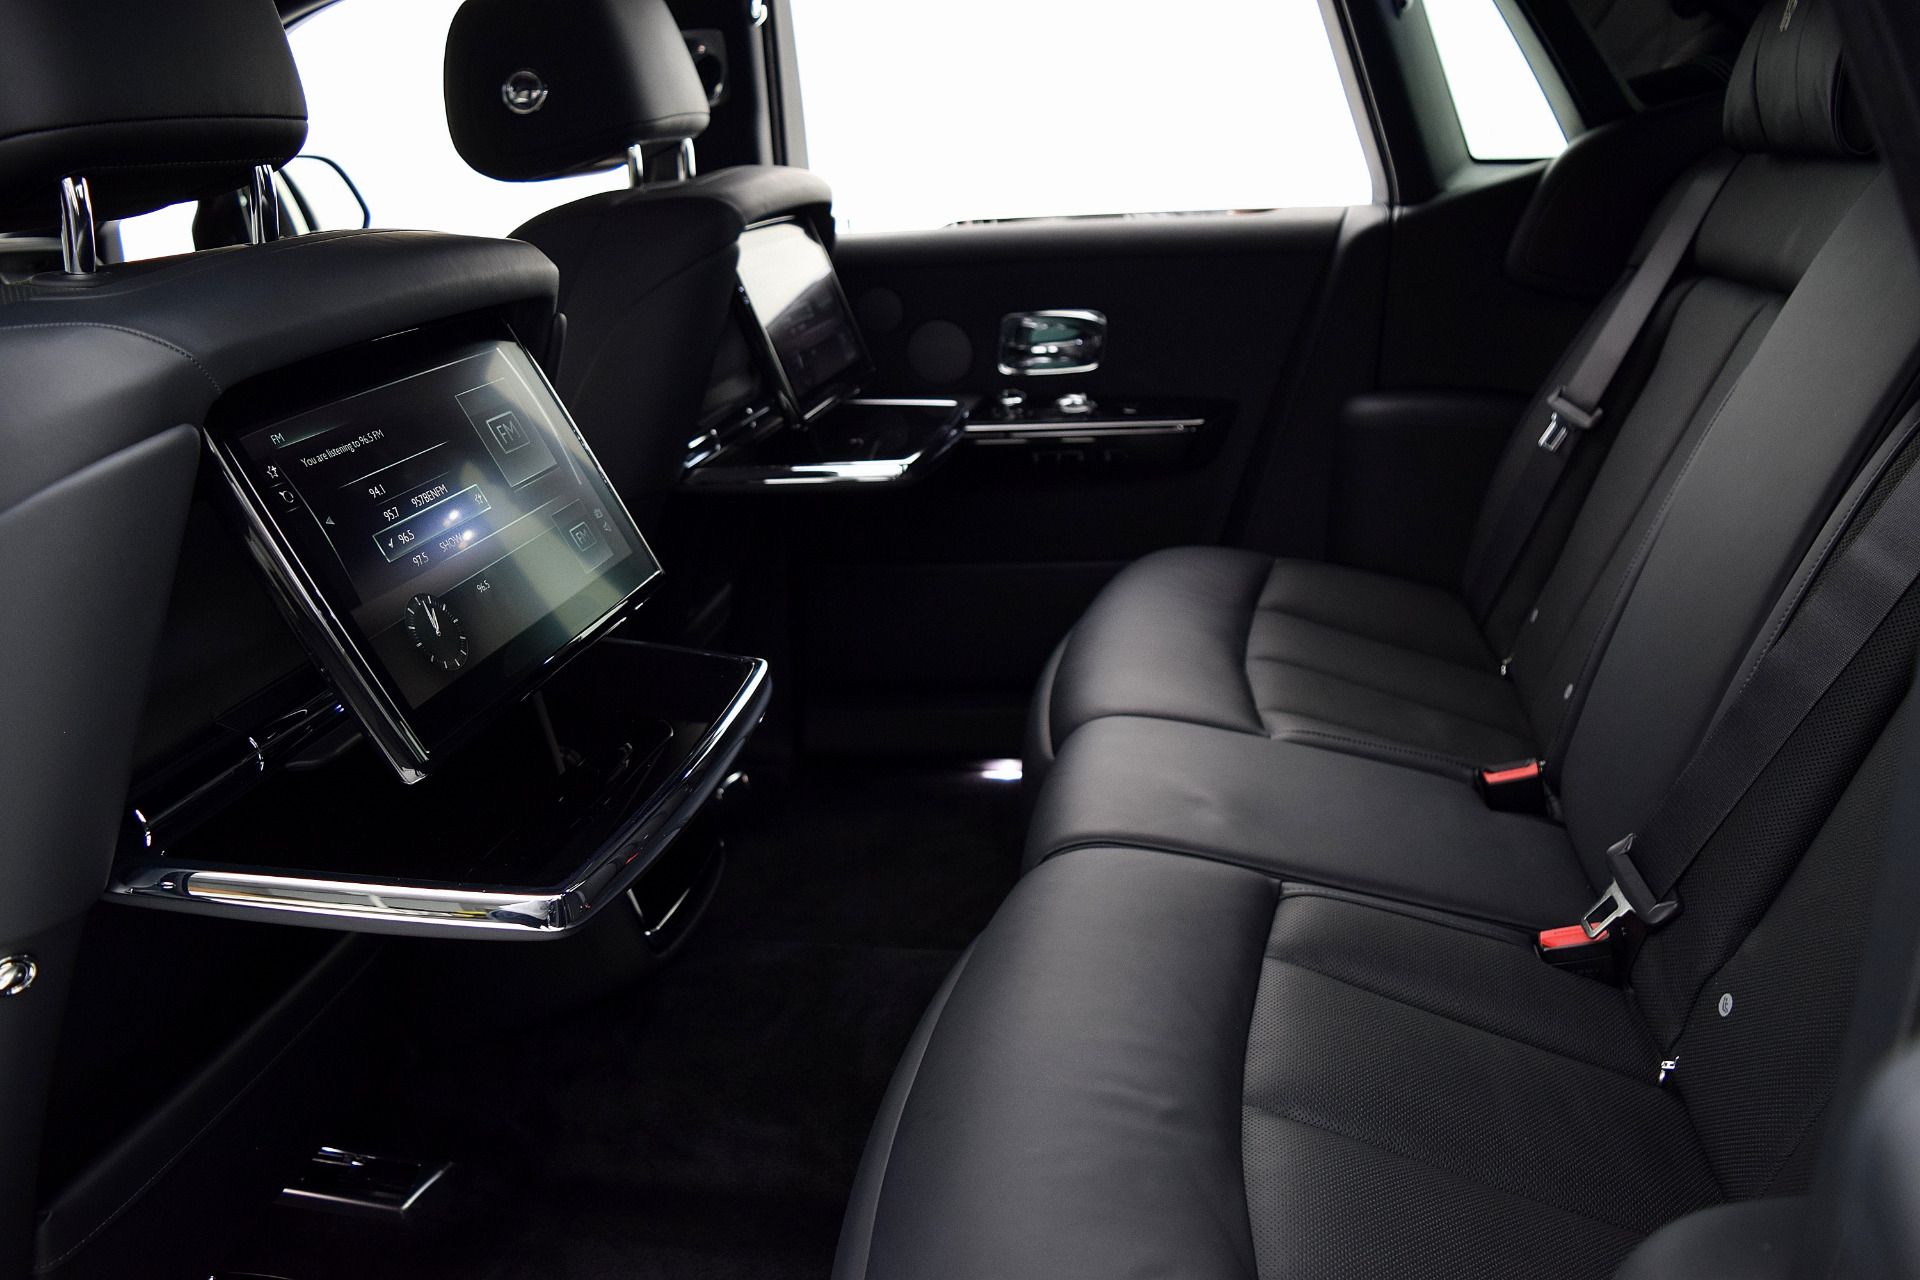 Cars: Best back seats - Rolls-Royce Phantom (1) - CNNMoney.com